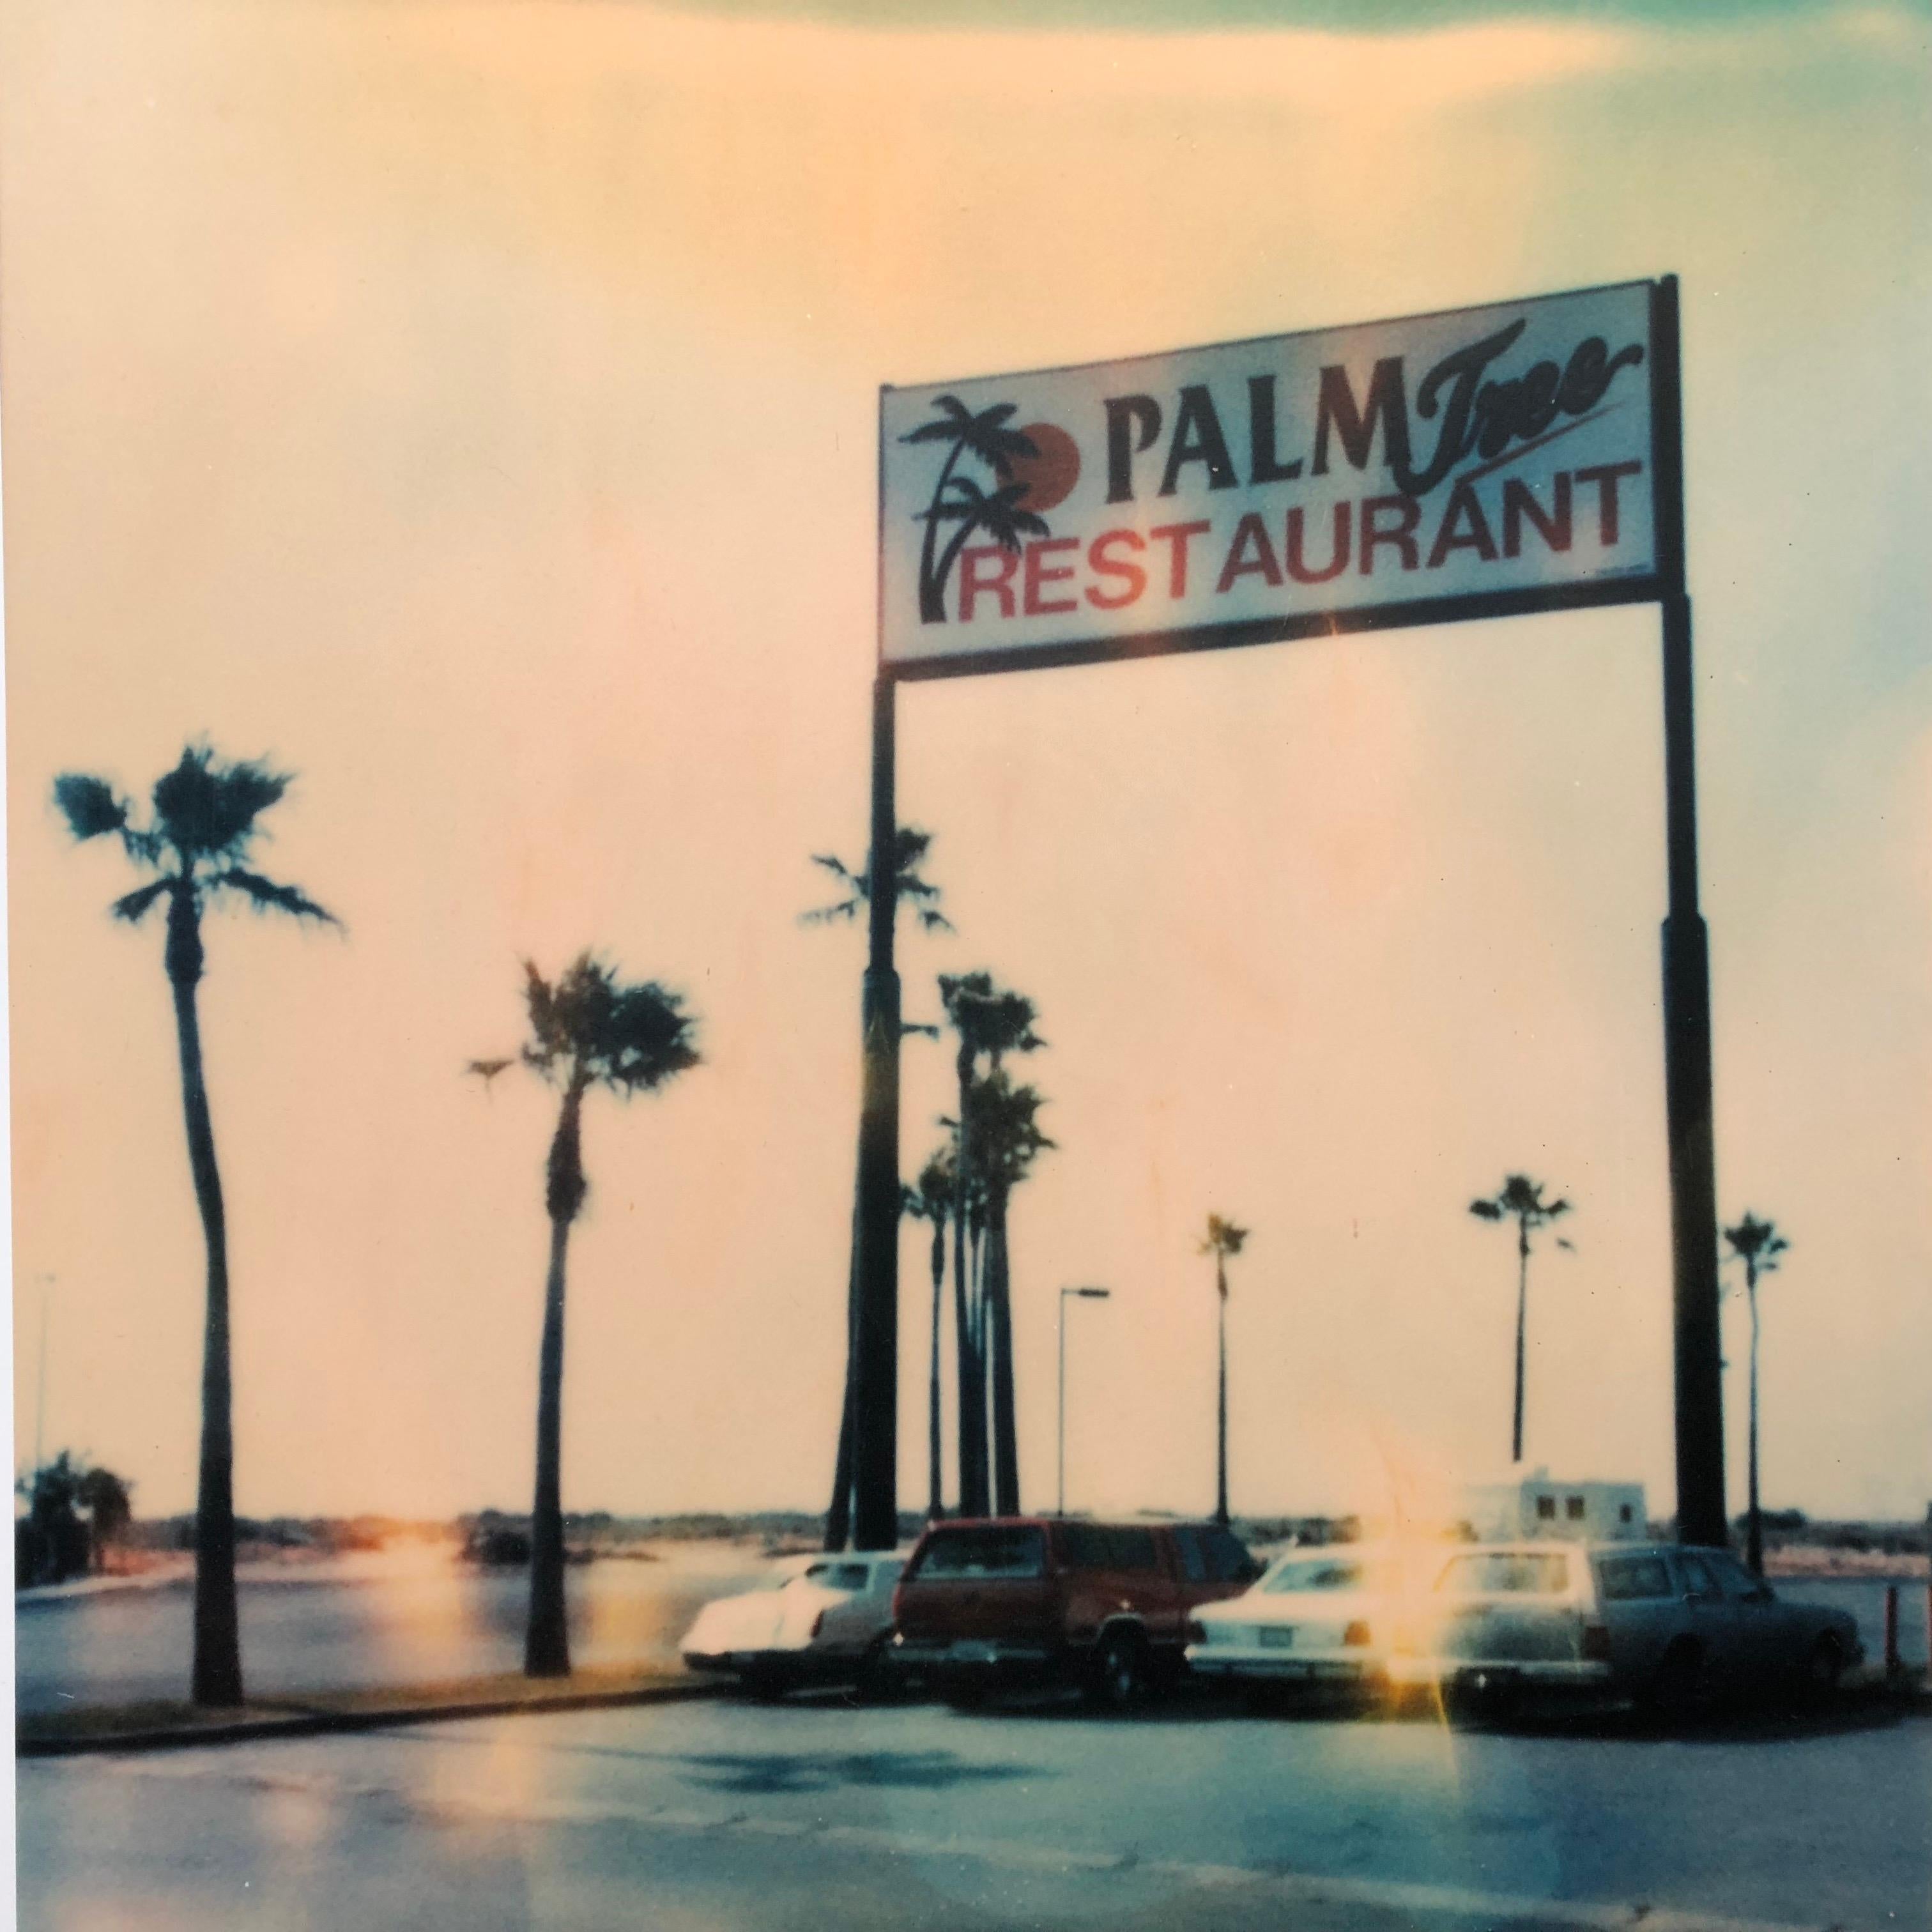 Palm Tree Restaurant (The Last Picture Show) - Contemporary Photograph by Stefanie Schneider